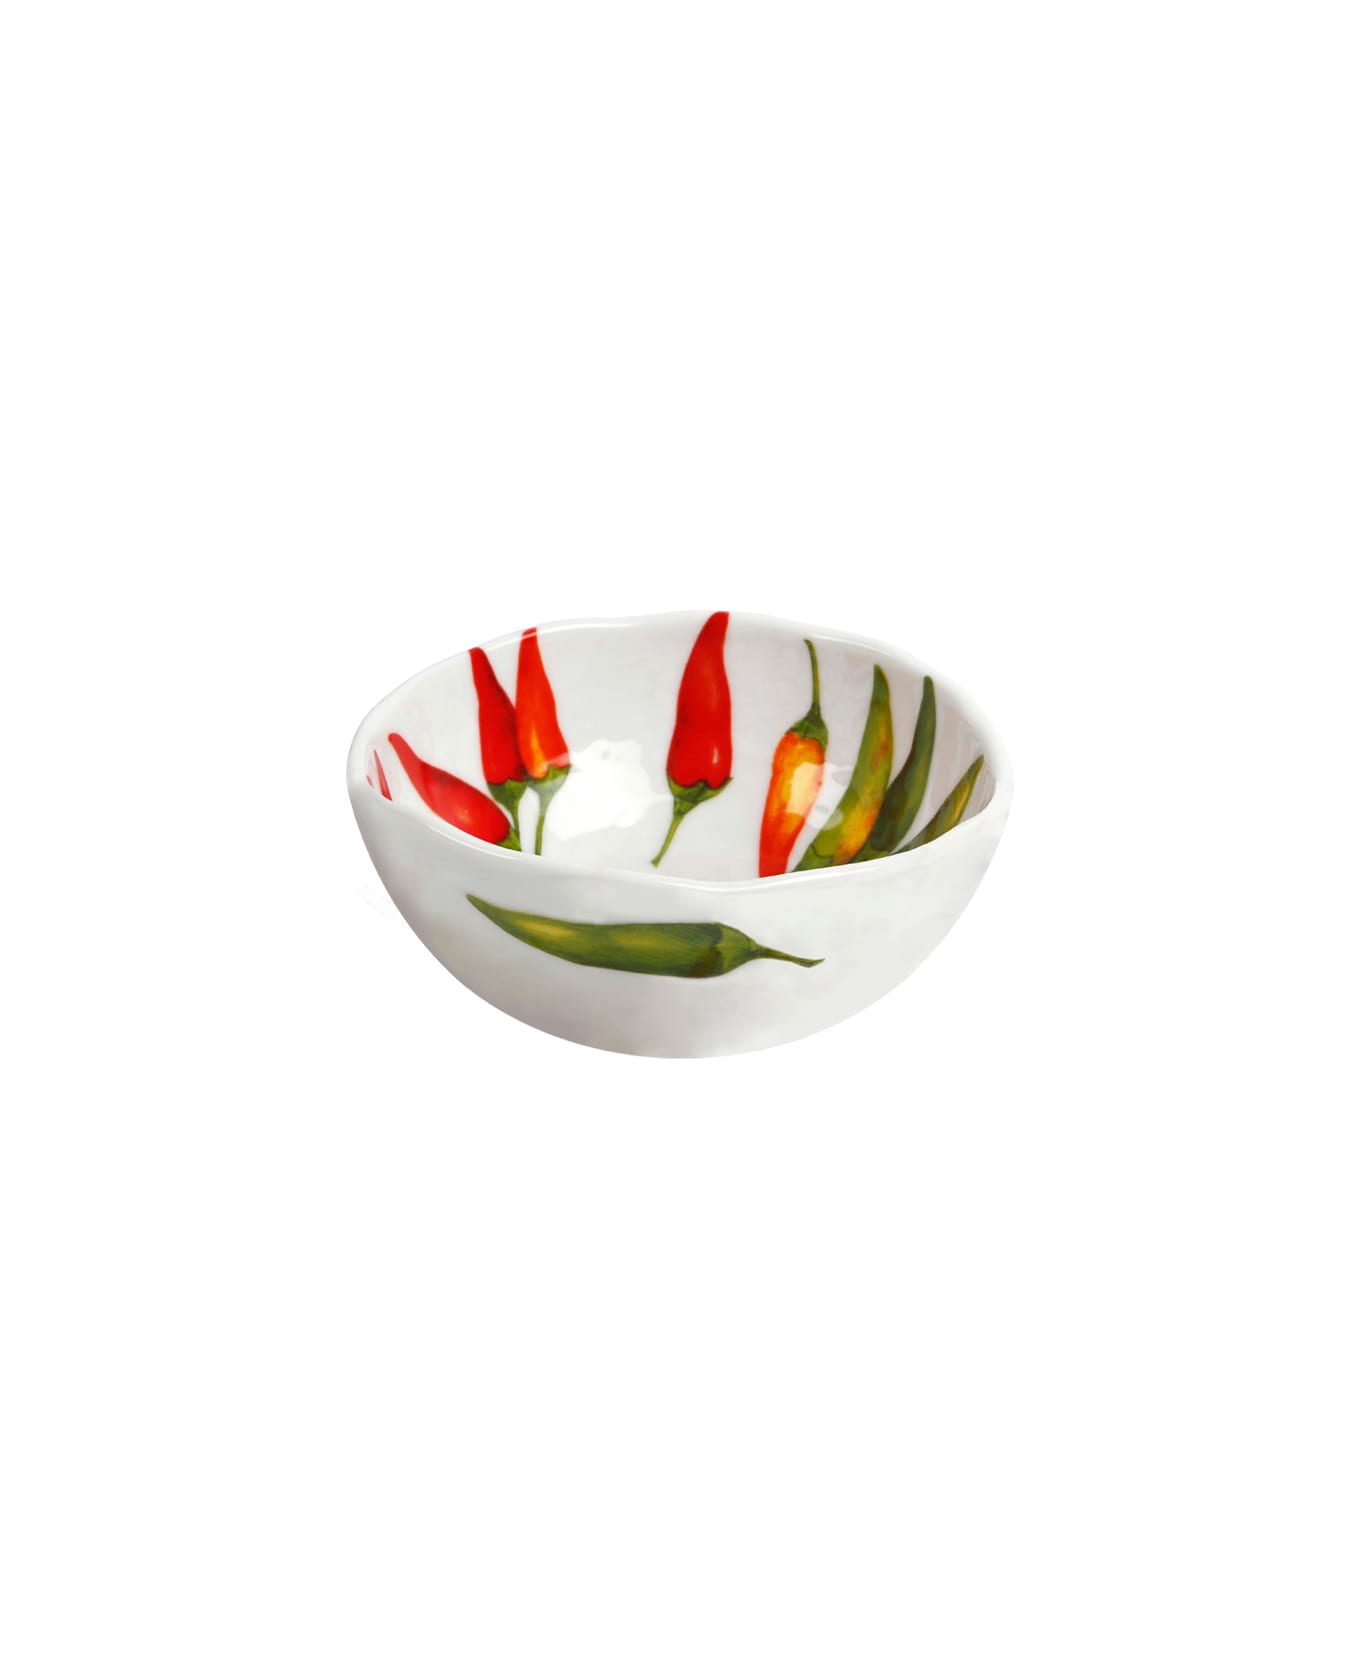 Taitù Set of 4 Small Bowls PEPERONCINI - Dieta Mediterranea Vegetables Collection - Red